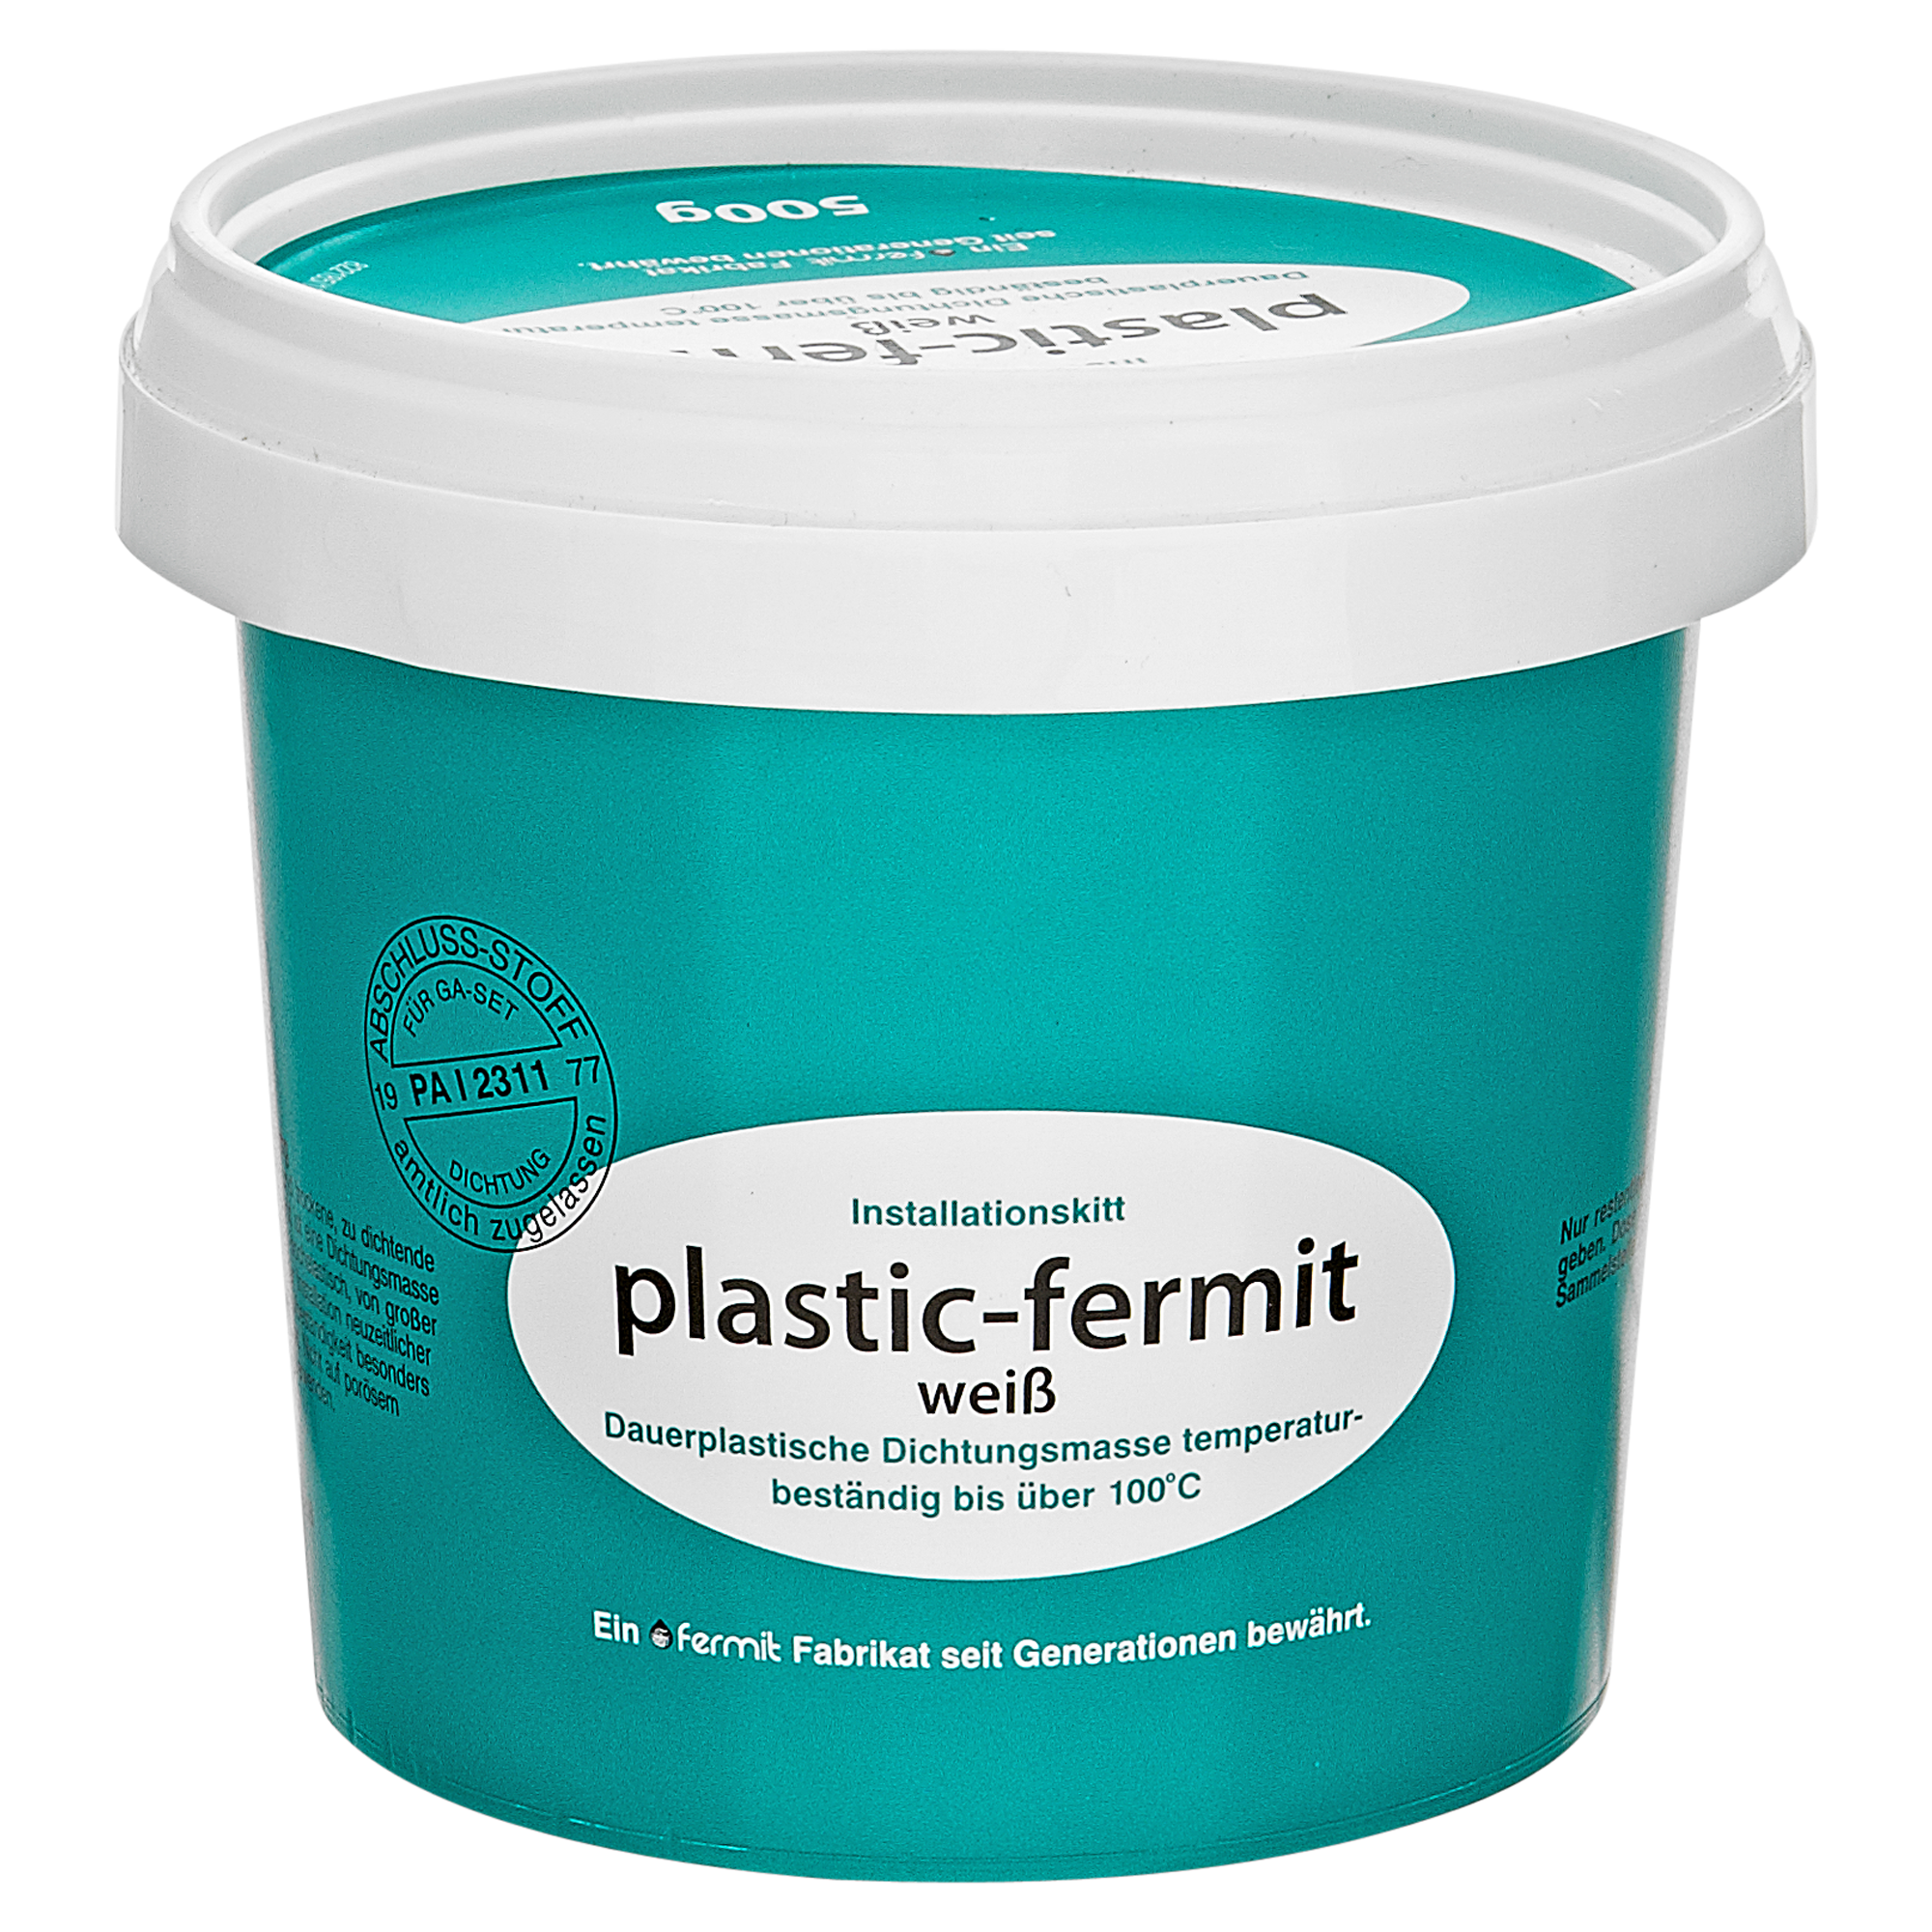 Plastic-Fermit Installationskit 500 g + product picture